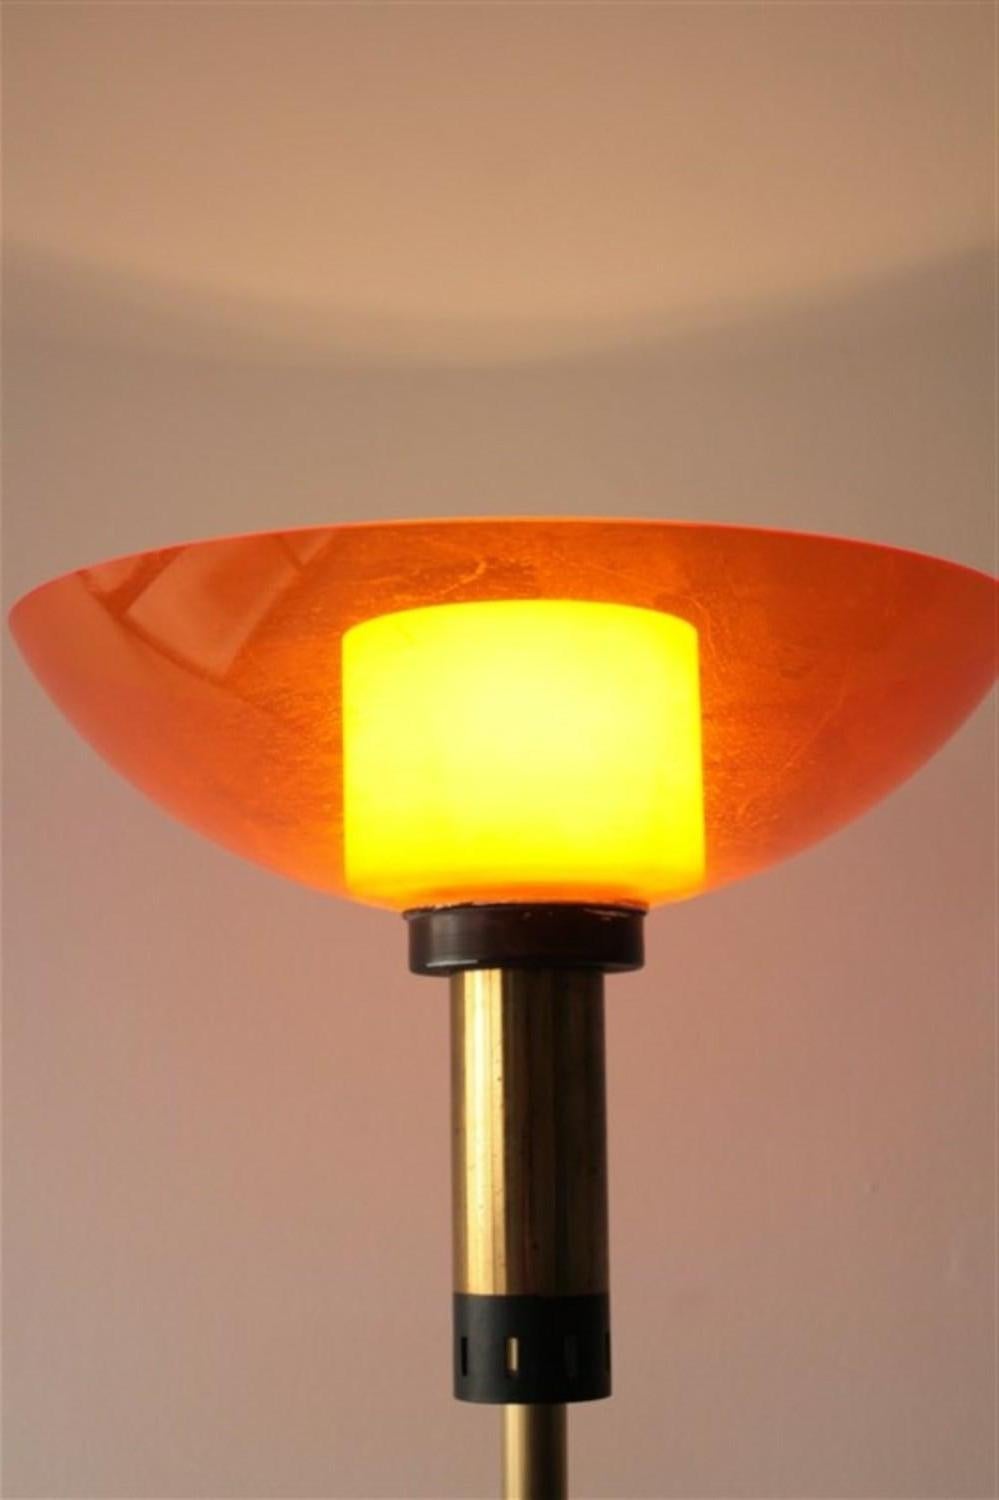 Midcentury floor lamp brass, glass opaline and orange perpex attributed to Stilux-Milano.